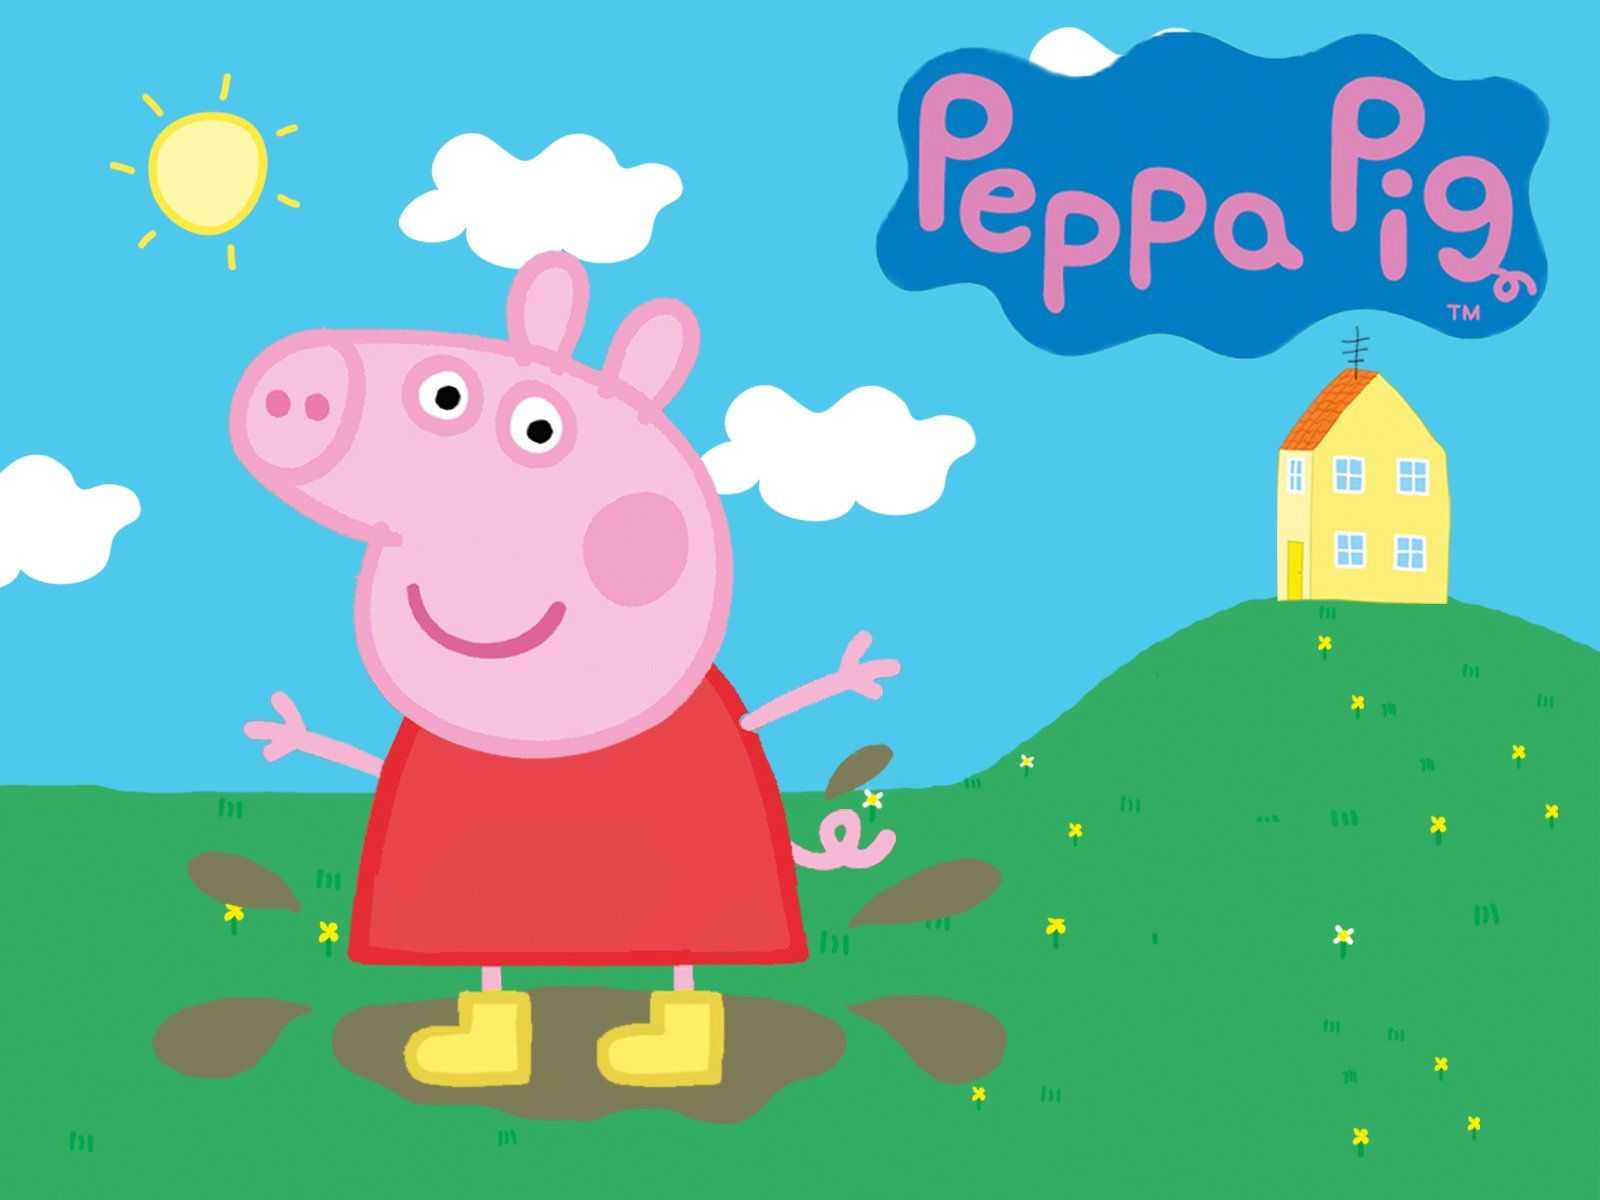 Peppa Pig House Wallpaper Creepy Story : The Creepy Horror Storyline